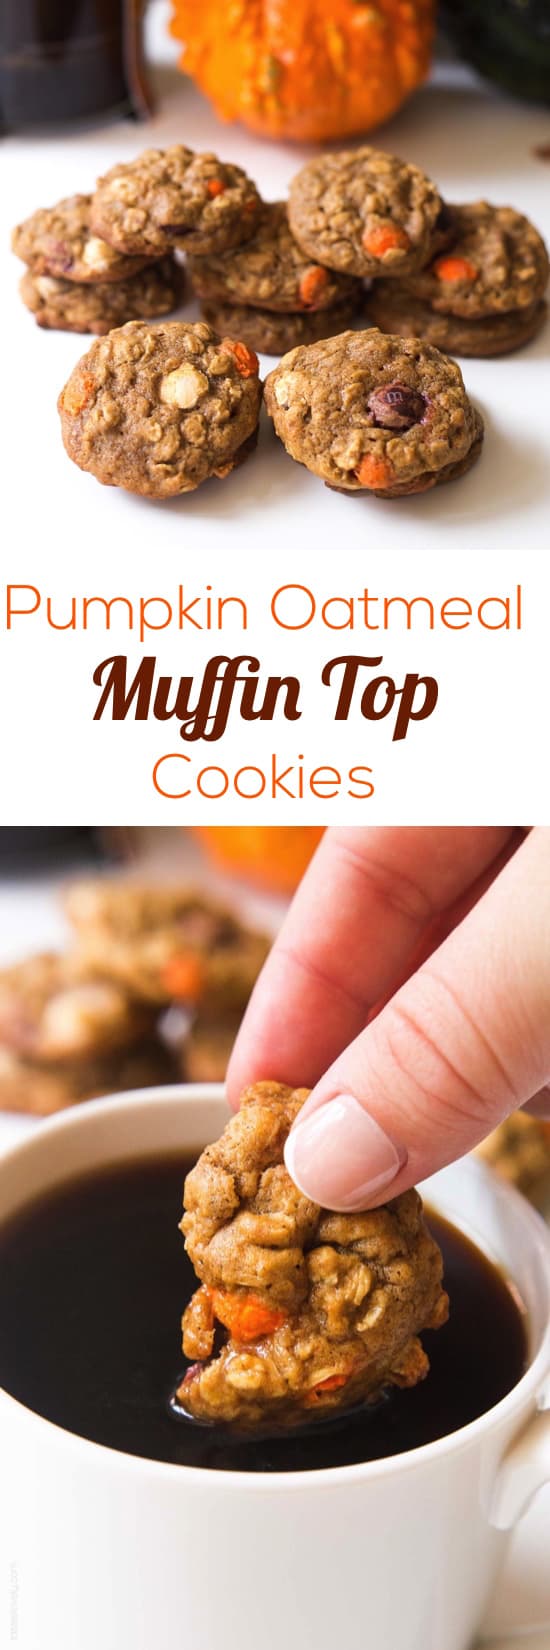 Pumpkin Oatmeal Muffin Top Cookies